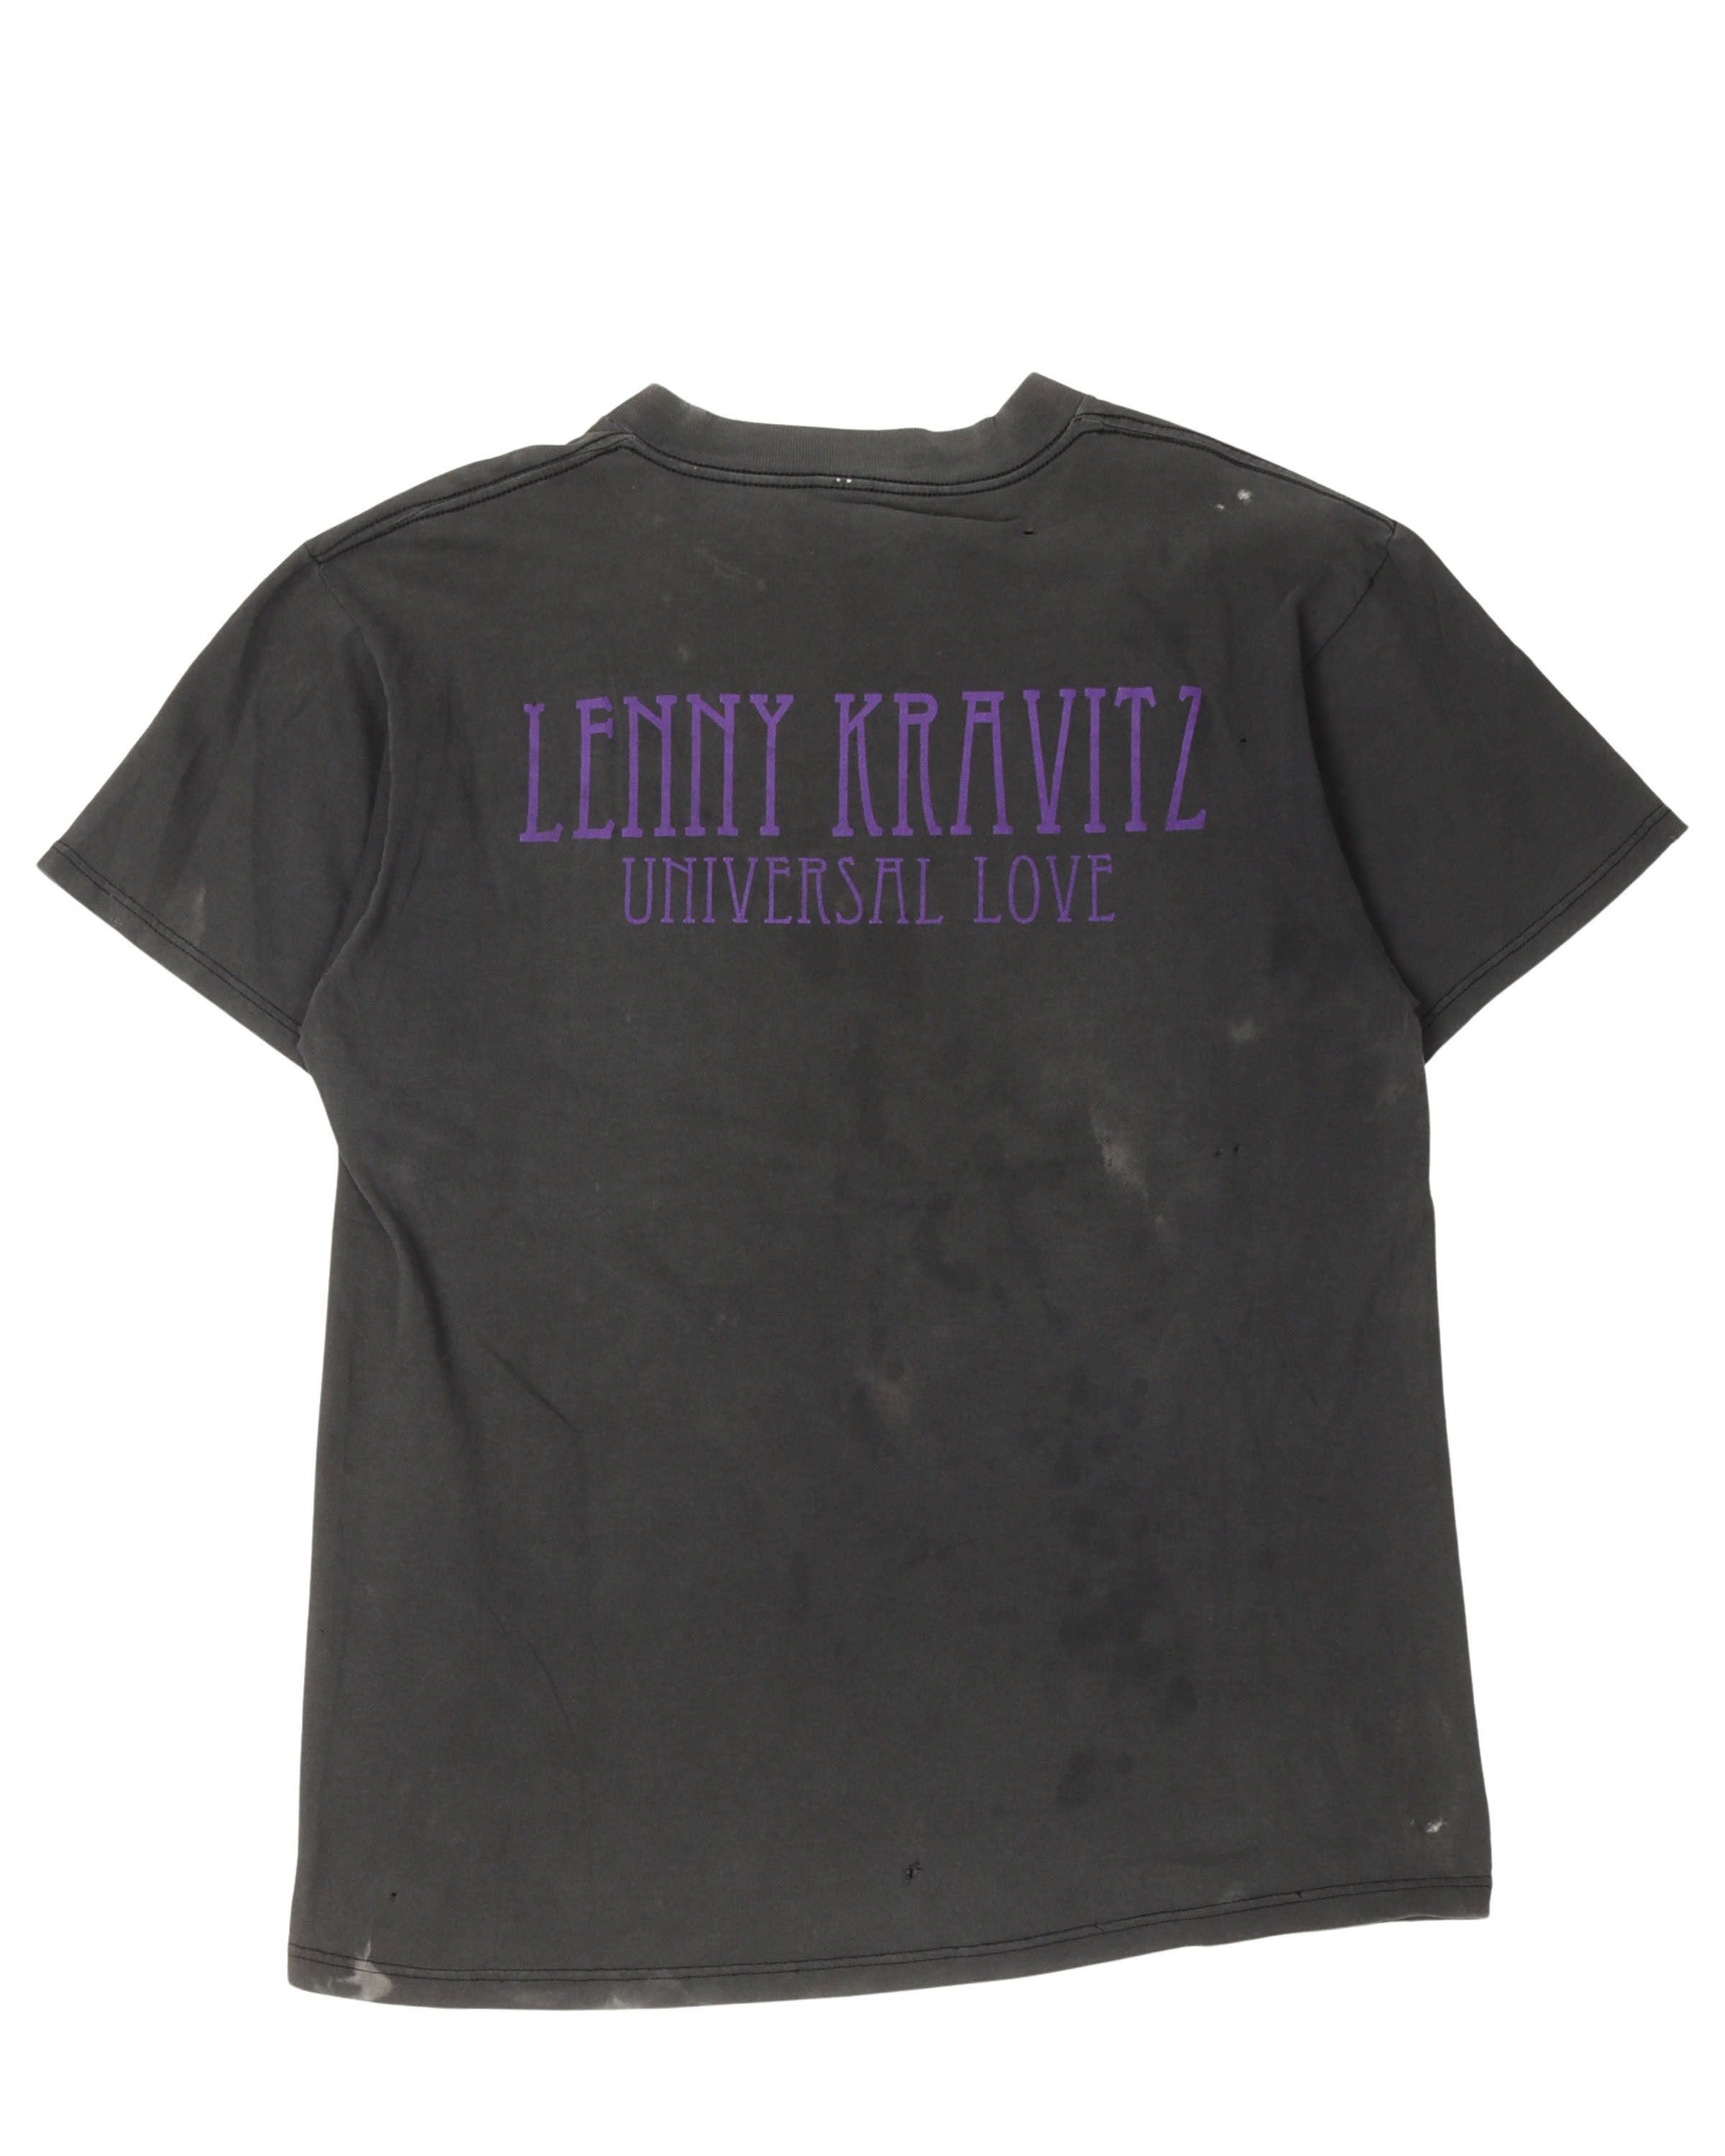 Lenny Kravitz Universal Love T-Shirt